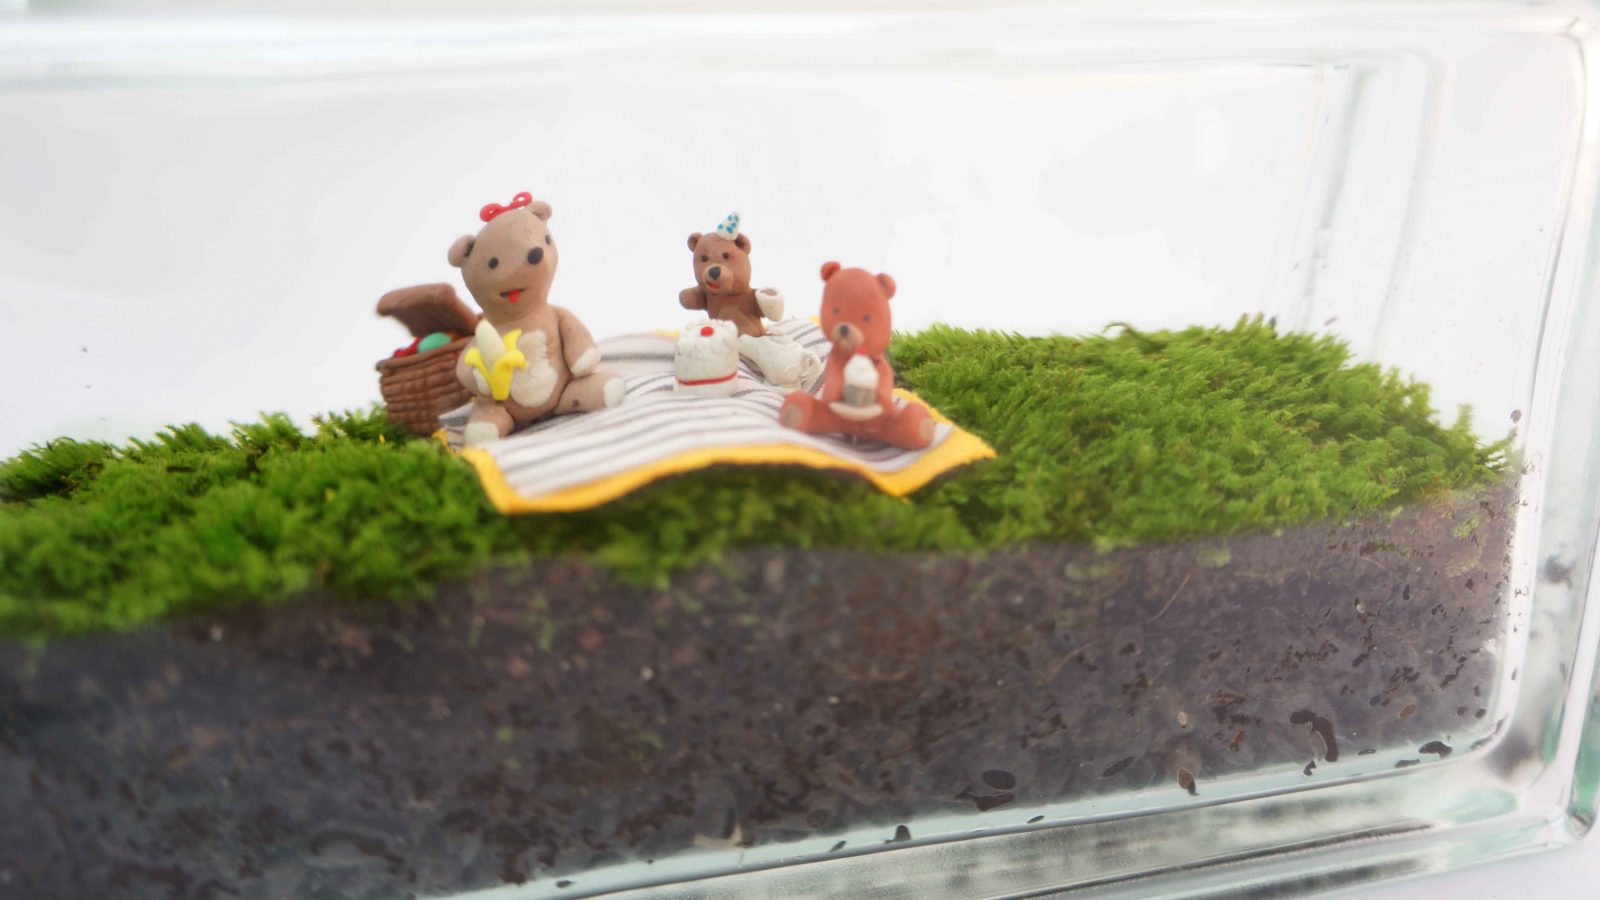 Moss terrarium glass block with teddy bear picnic